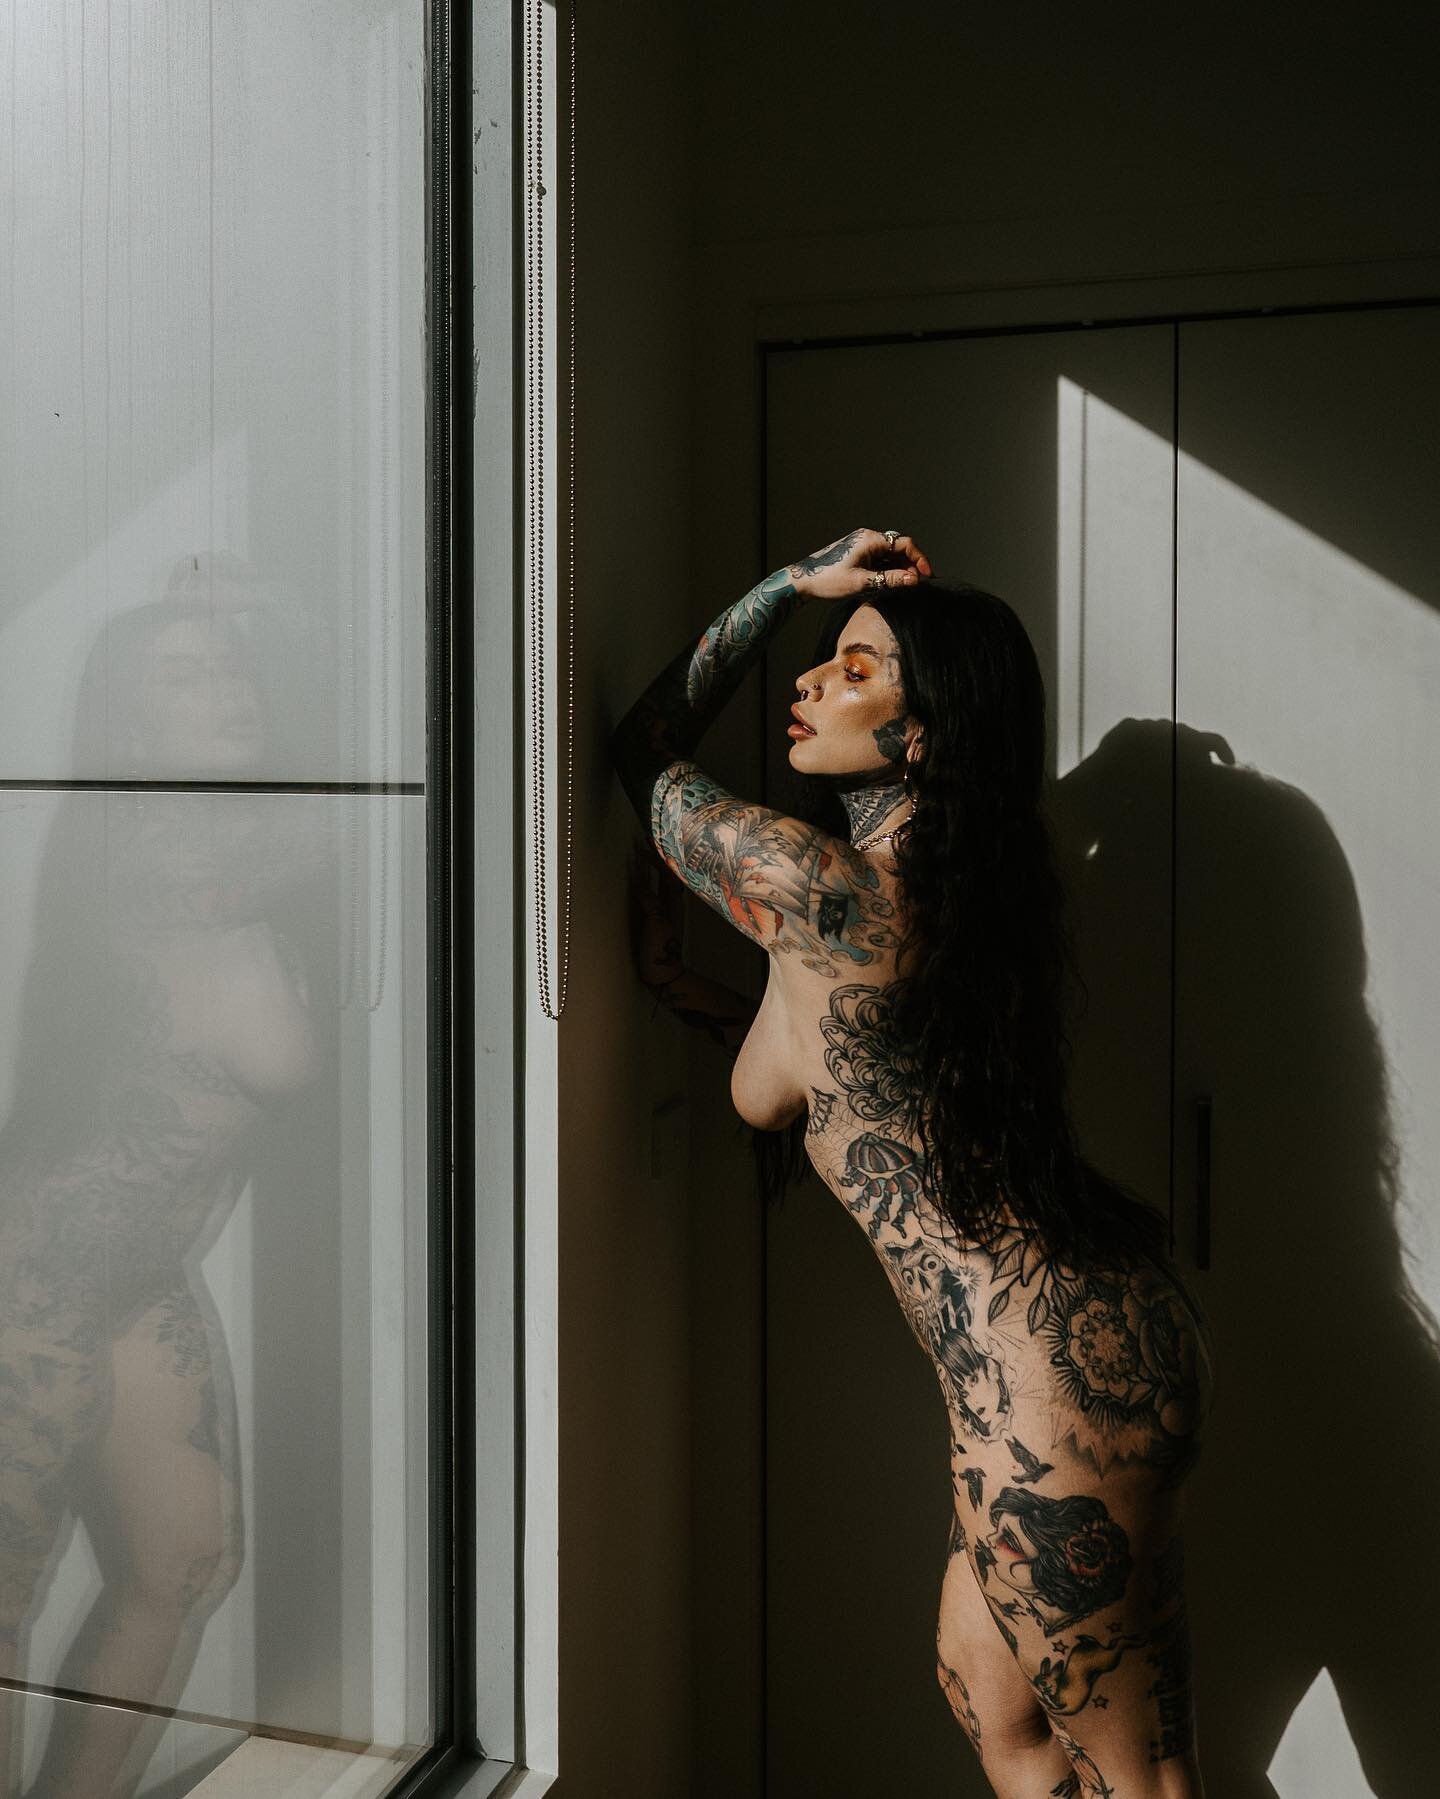 Between lockdowns
.
With the awesome @bunnyharlow
.
.
@olympus_au #tattoo #inkedgirls #melbournephotographer #portrait #melbournemodel #goldcoastmodel #bodypositivity #tattoomodel #model #inked #inkedgirl @bare.mag_ @madareff @tattoo.addictss._ @inke